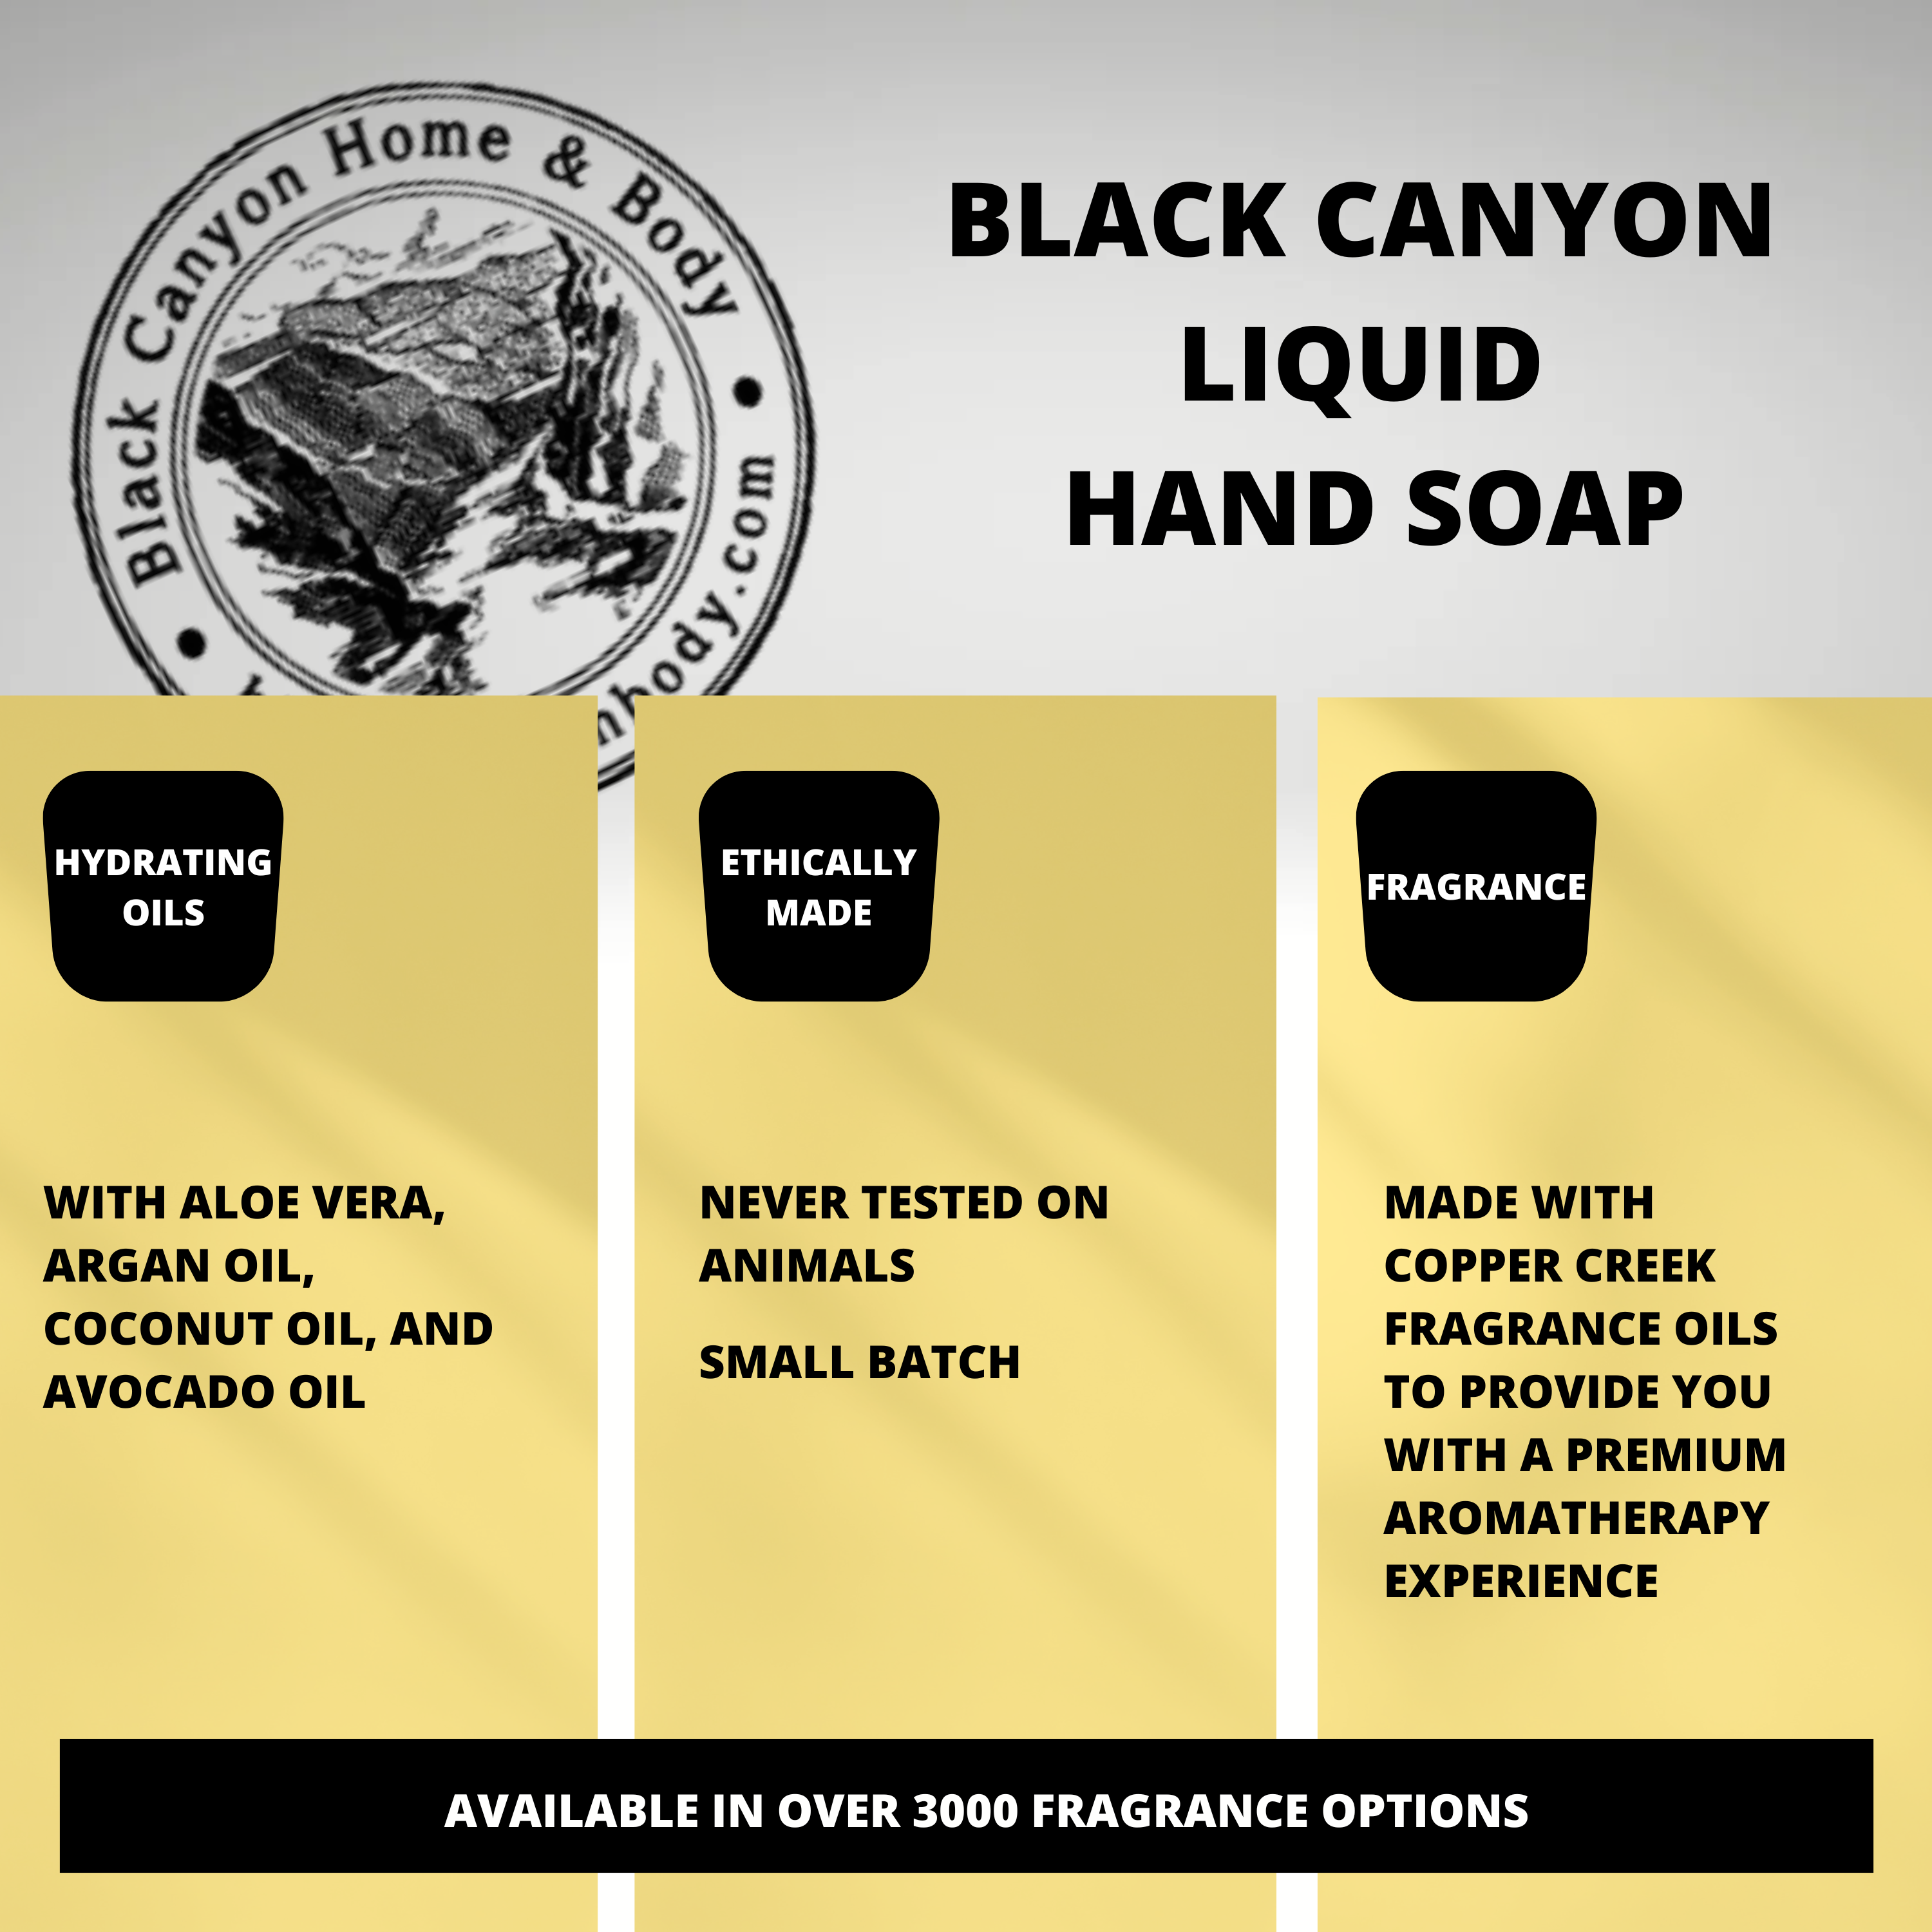 Black Canyon Cucumber & Cantaloupe Scented Liquid Hand Soap